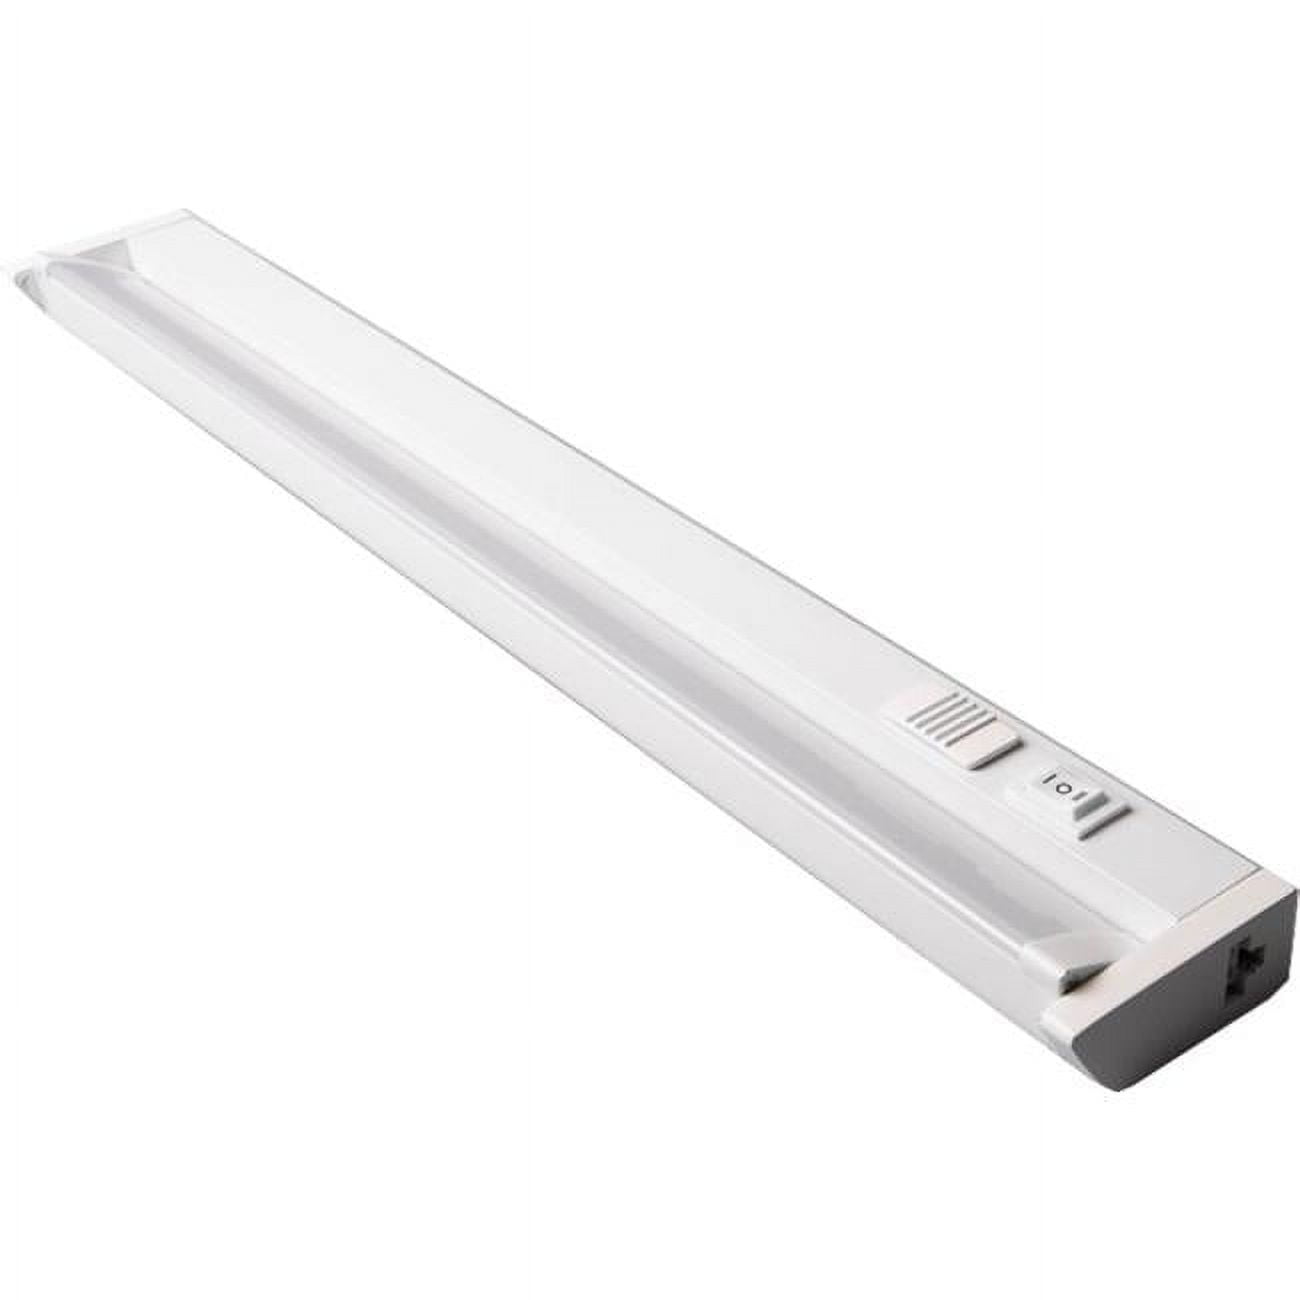 Picture of Westek 3002913 18 in. Amertac White Plug-In LED Undercabinet Light, 600 Lumens